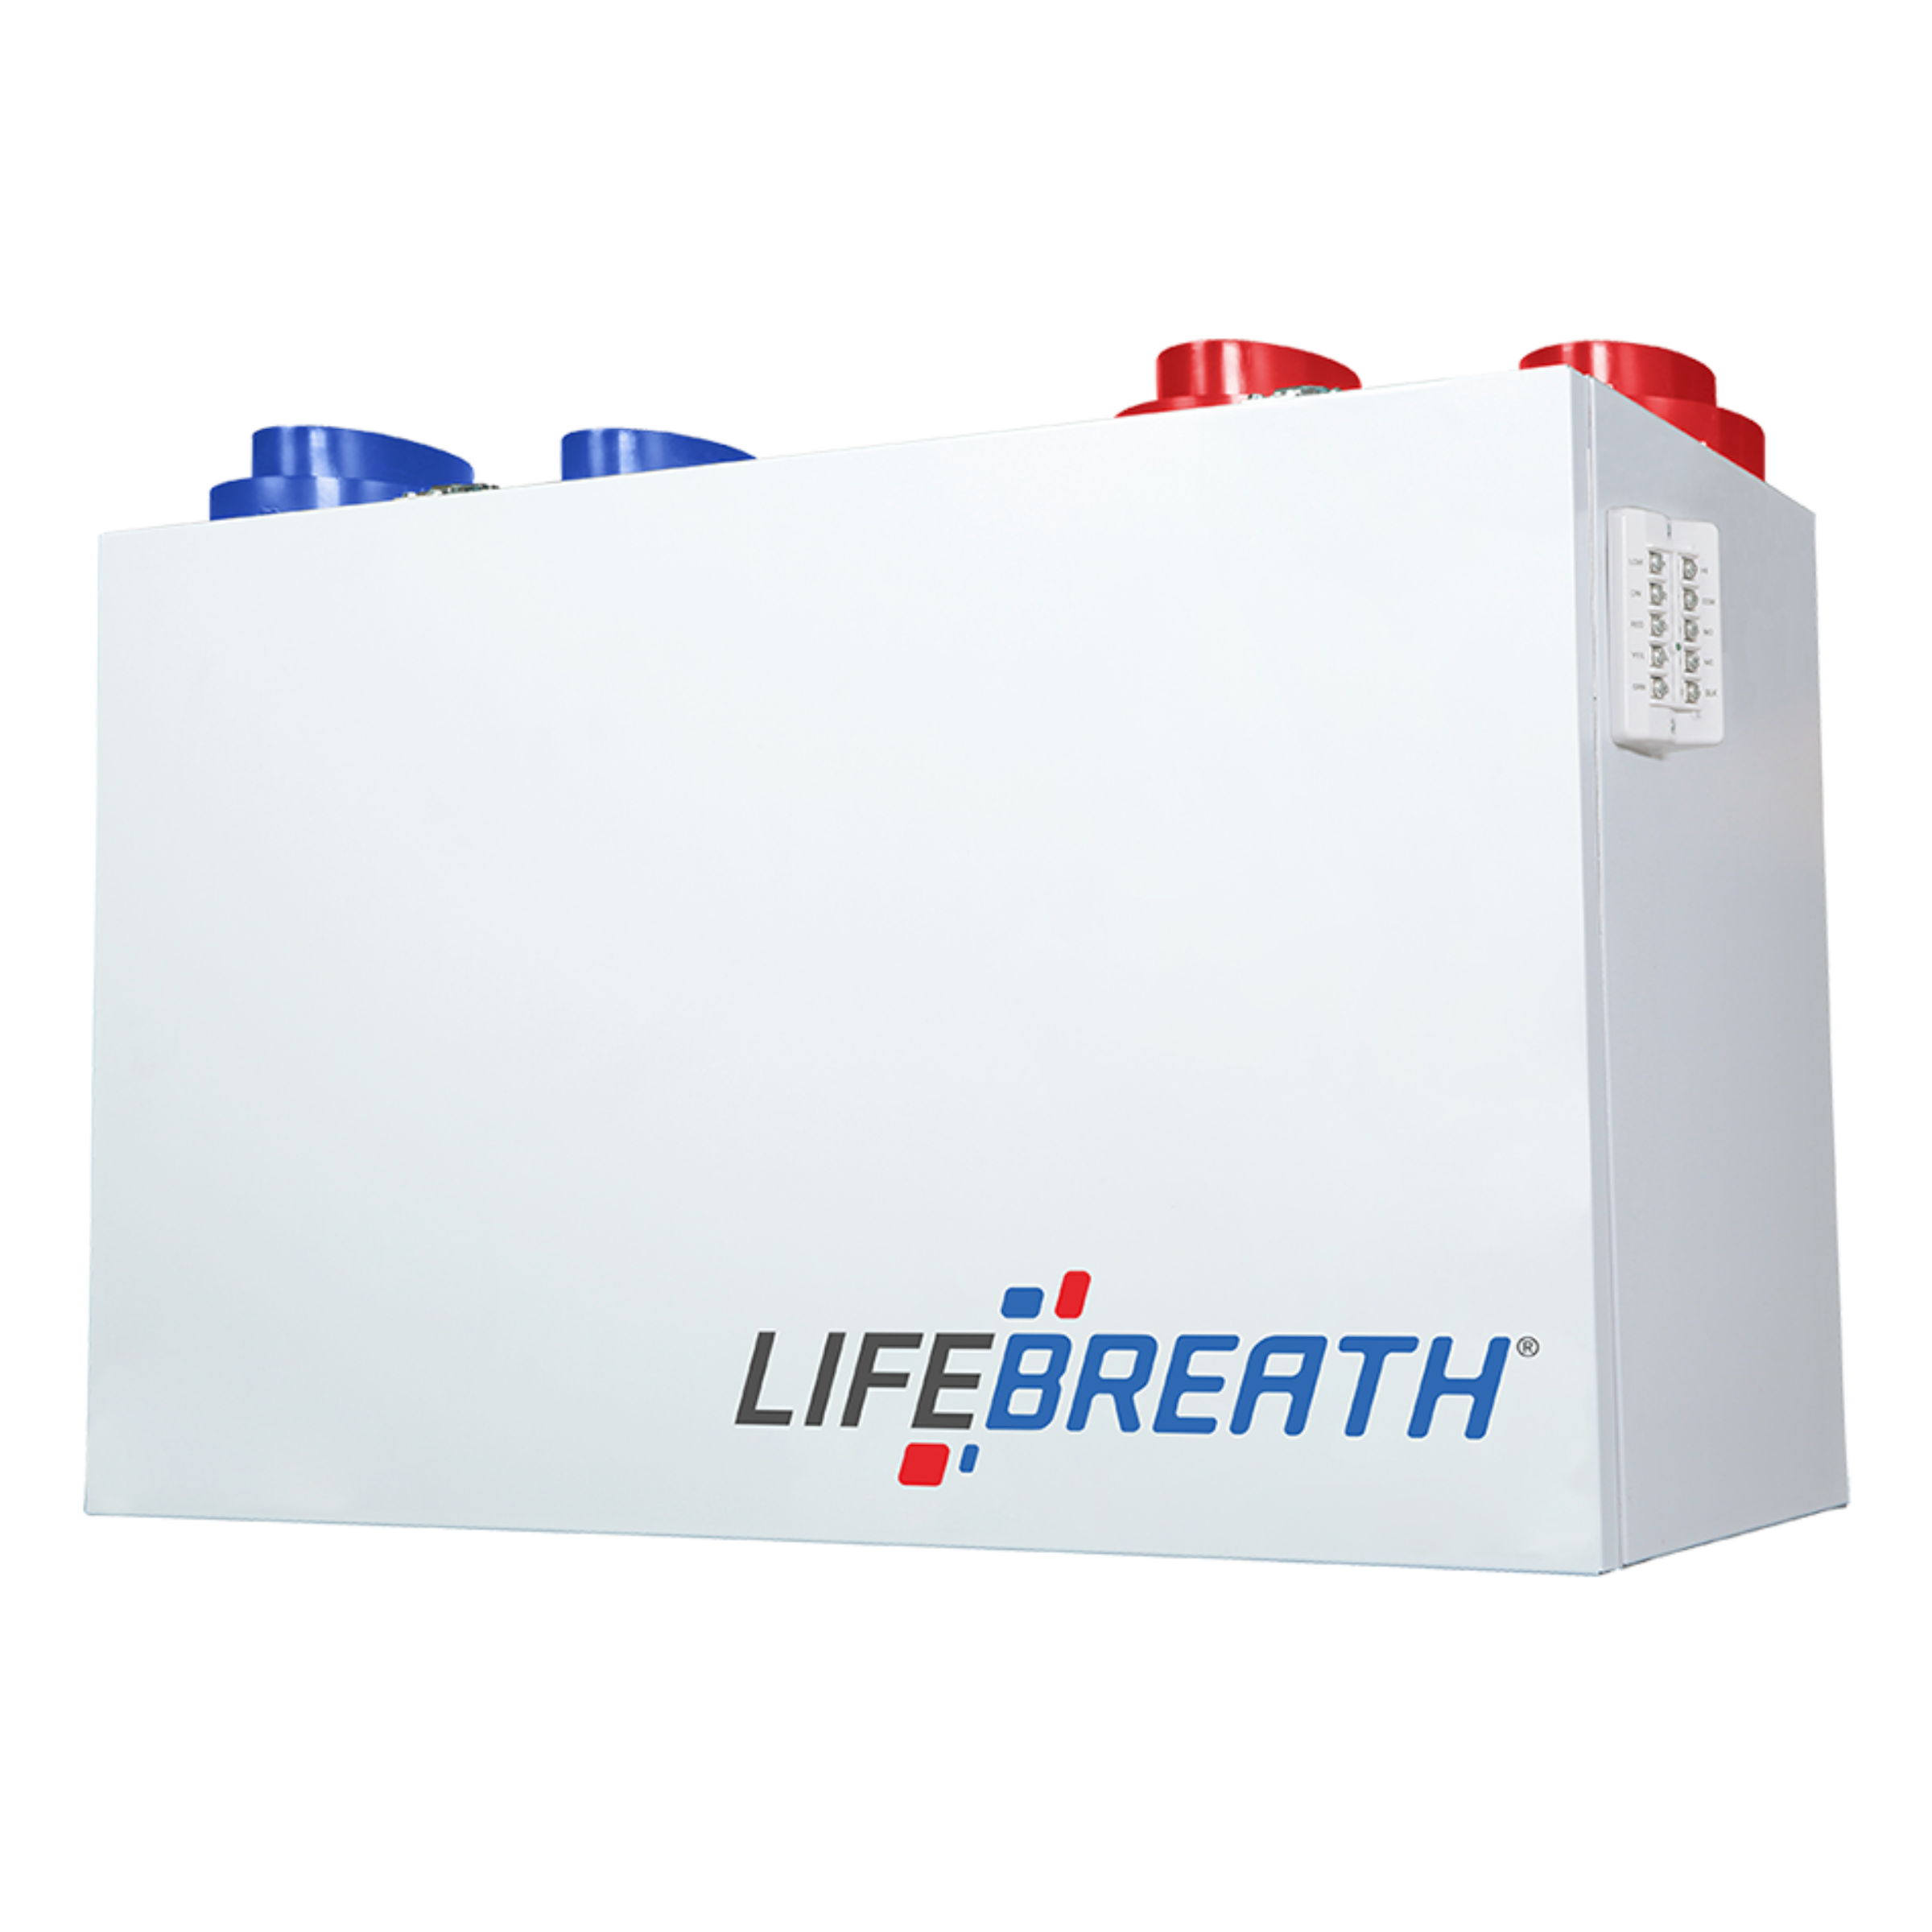 267MAX Lifebreath Residential Heat Recovery Ventilator (HRV), 307 CFM, 120 V